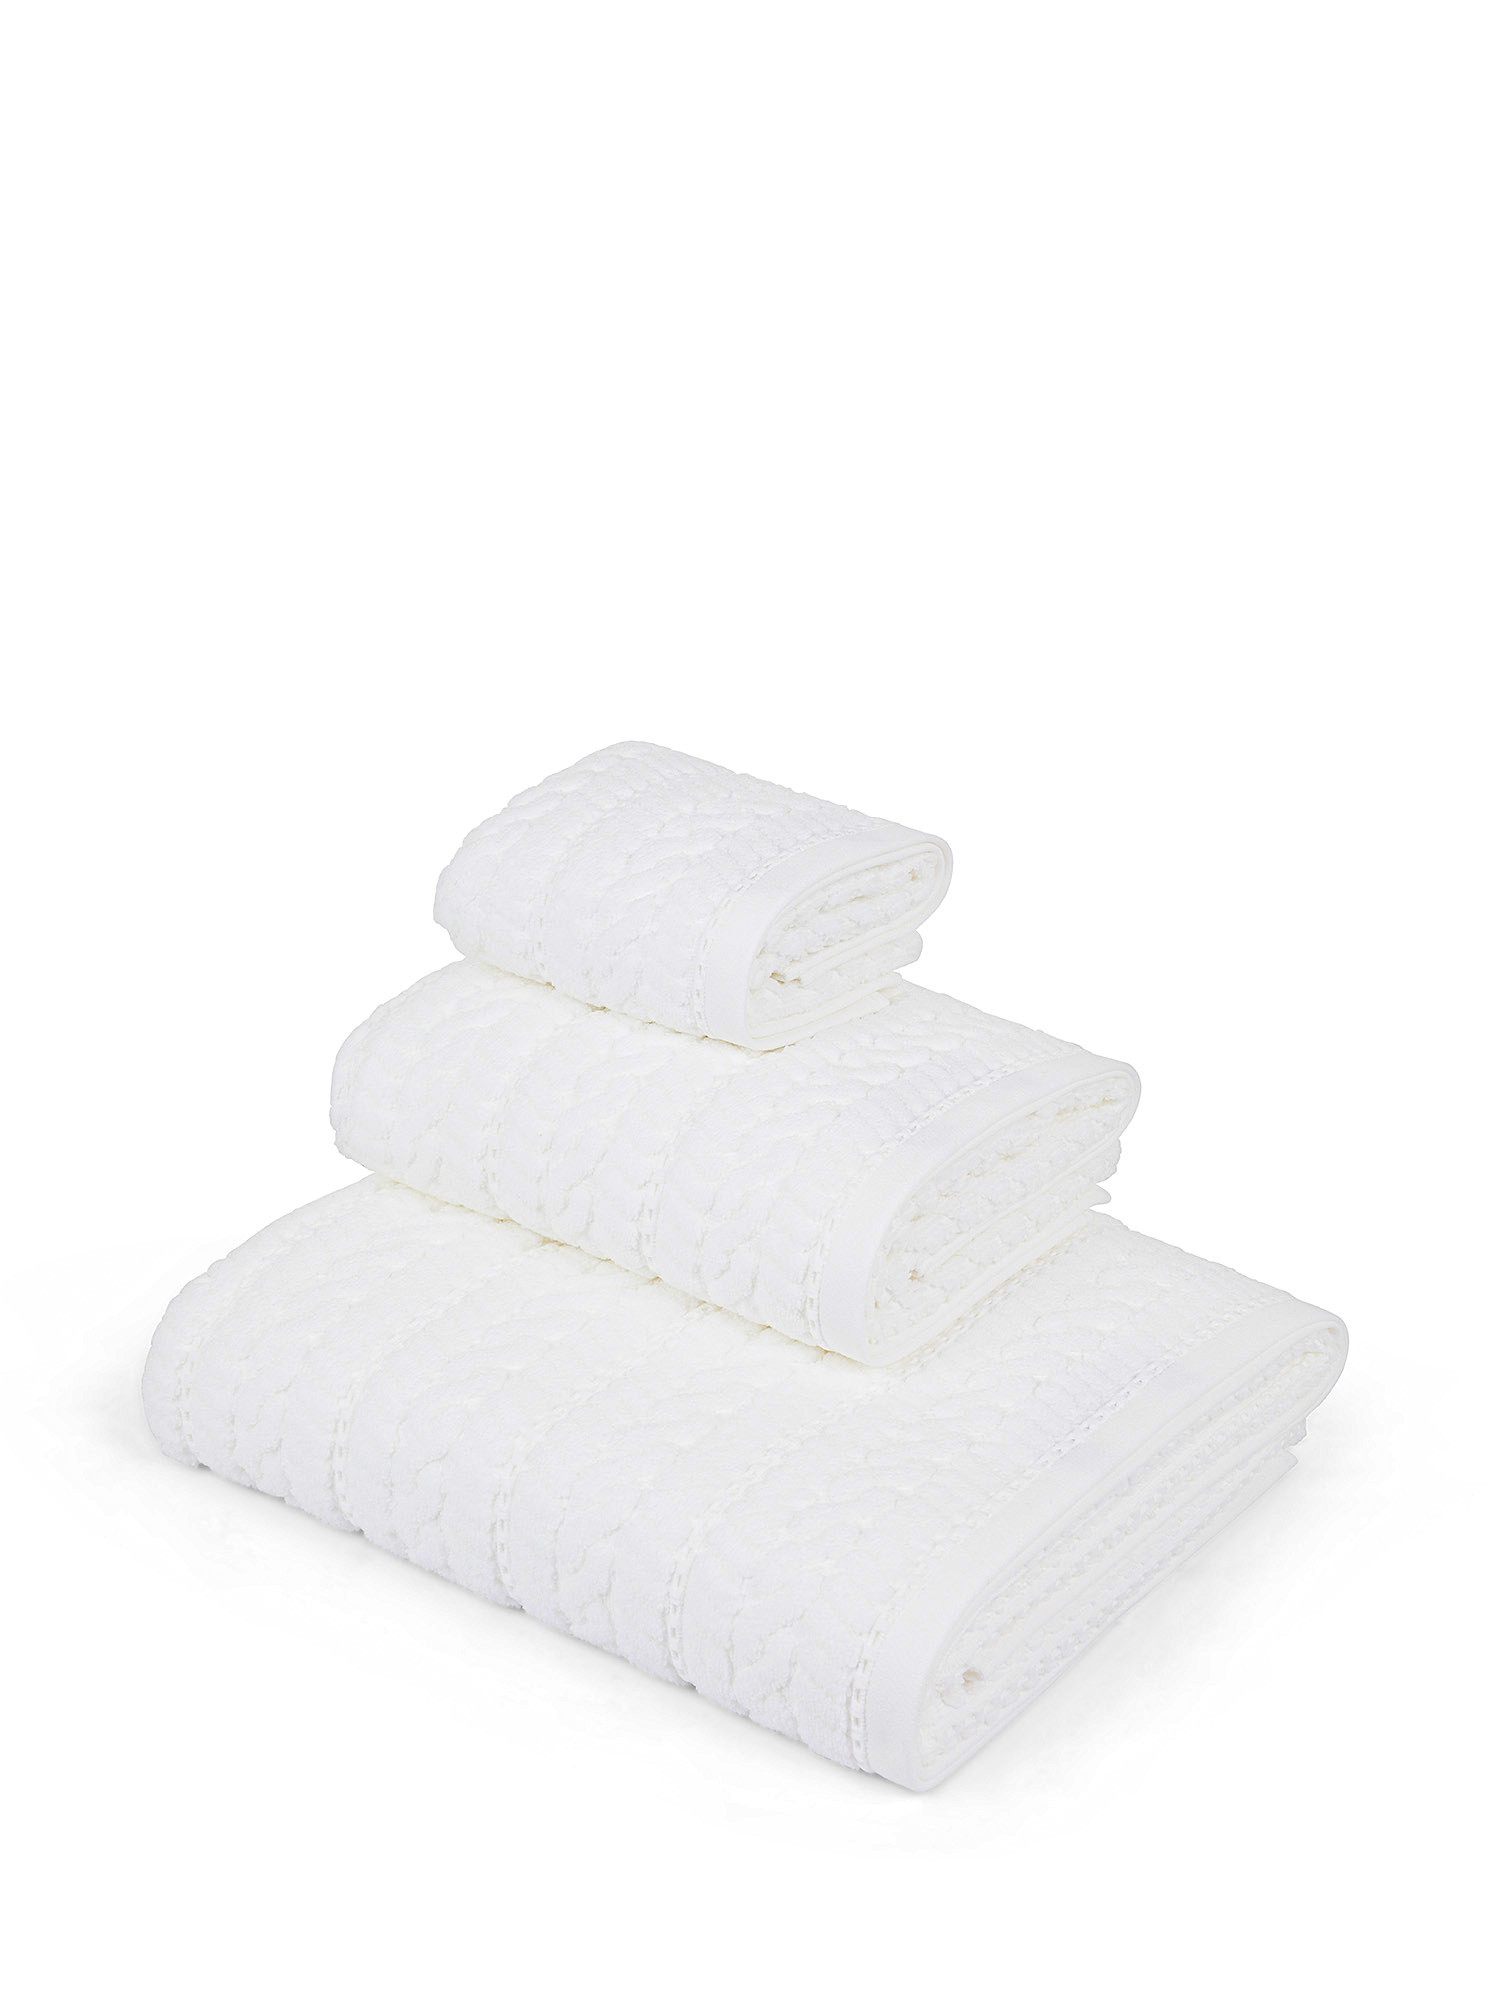 Thermae zero twist cotton towel, White, large image number 0